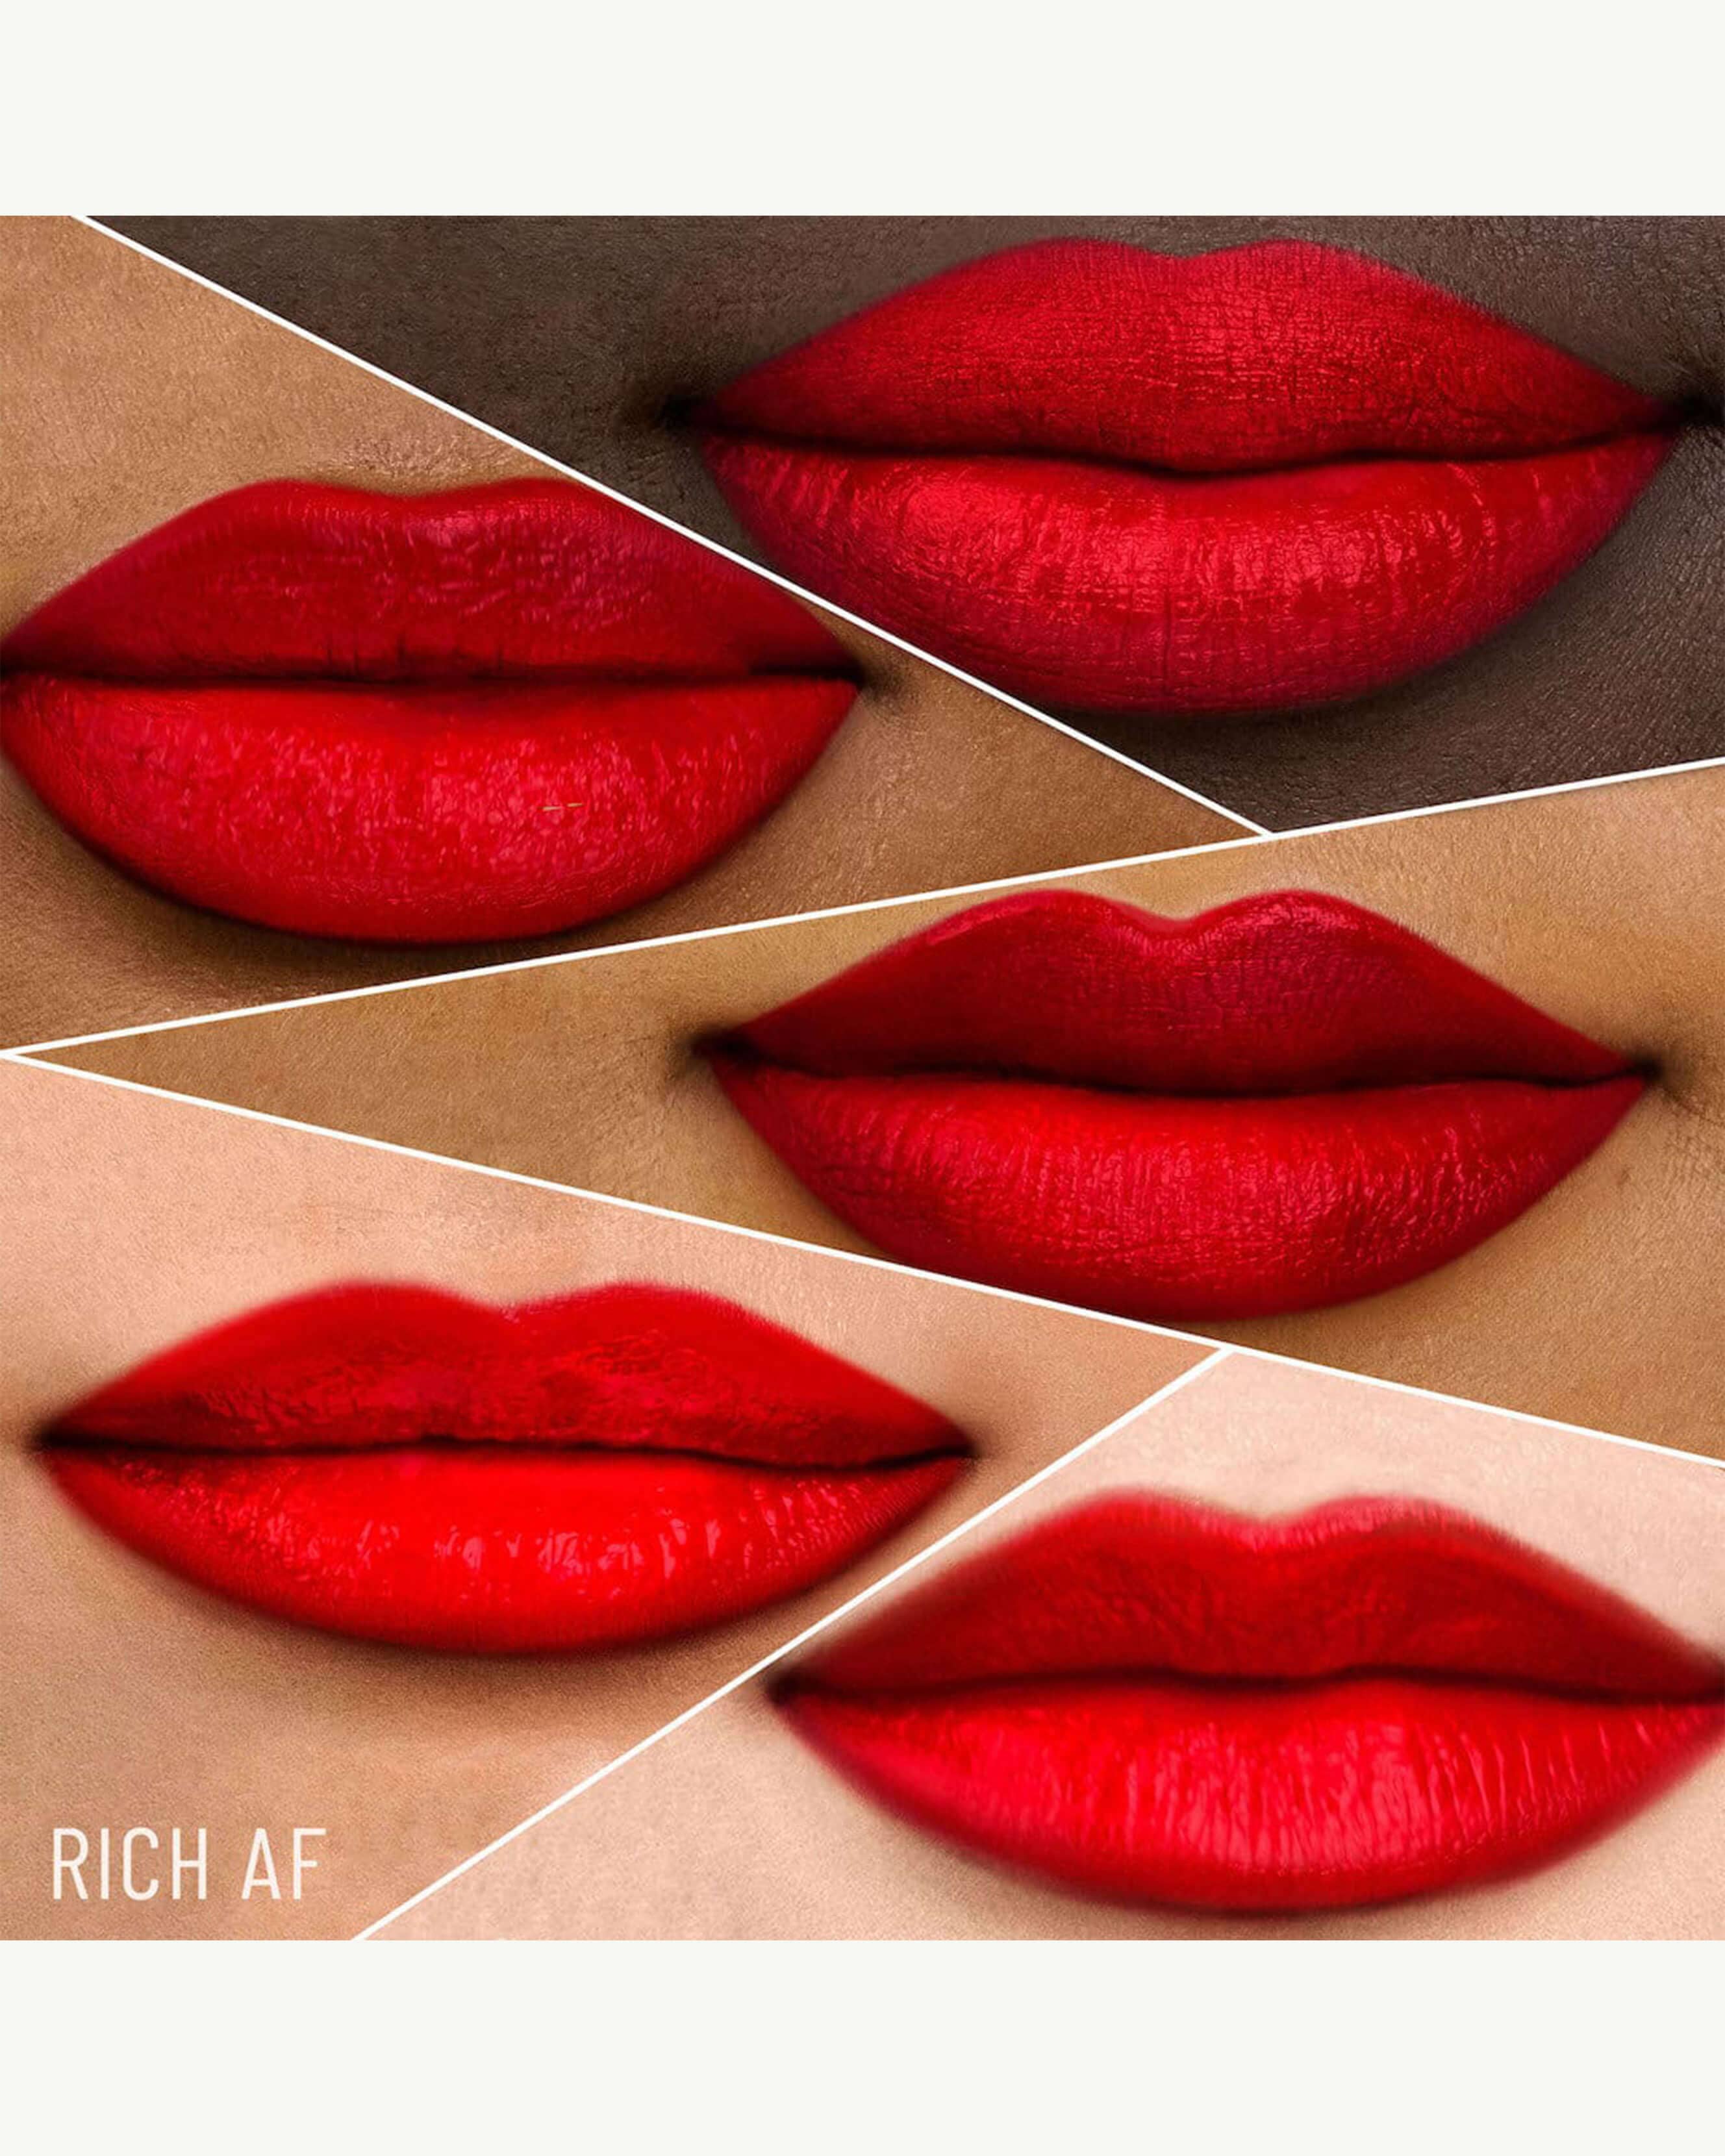 Rich AF (classic red)